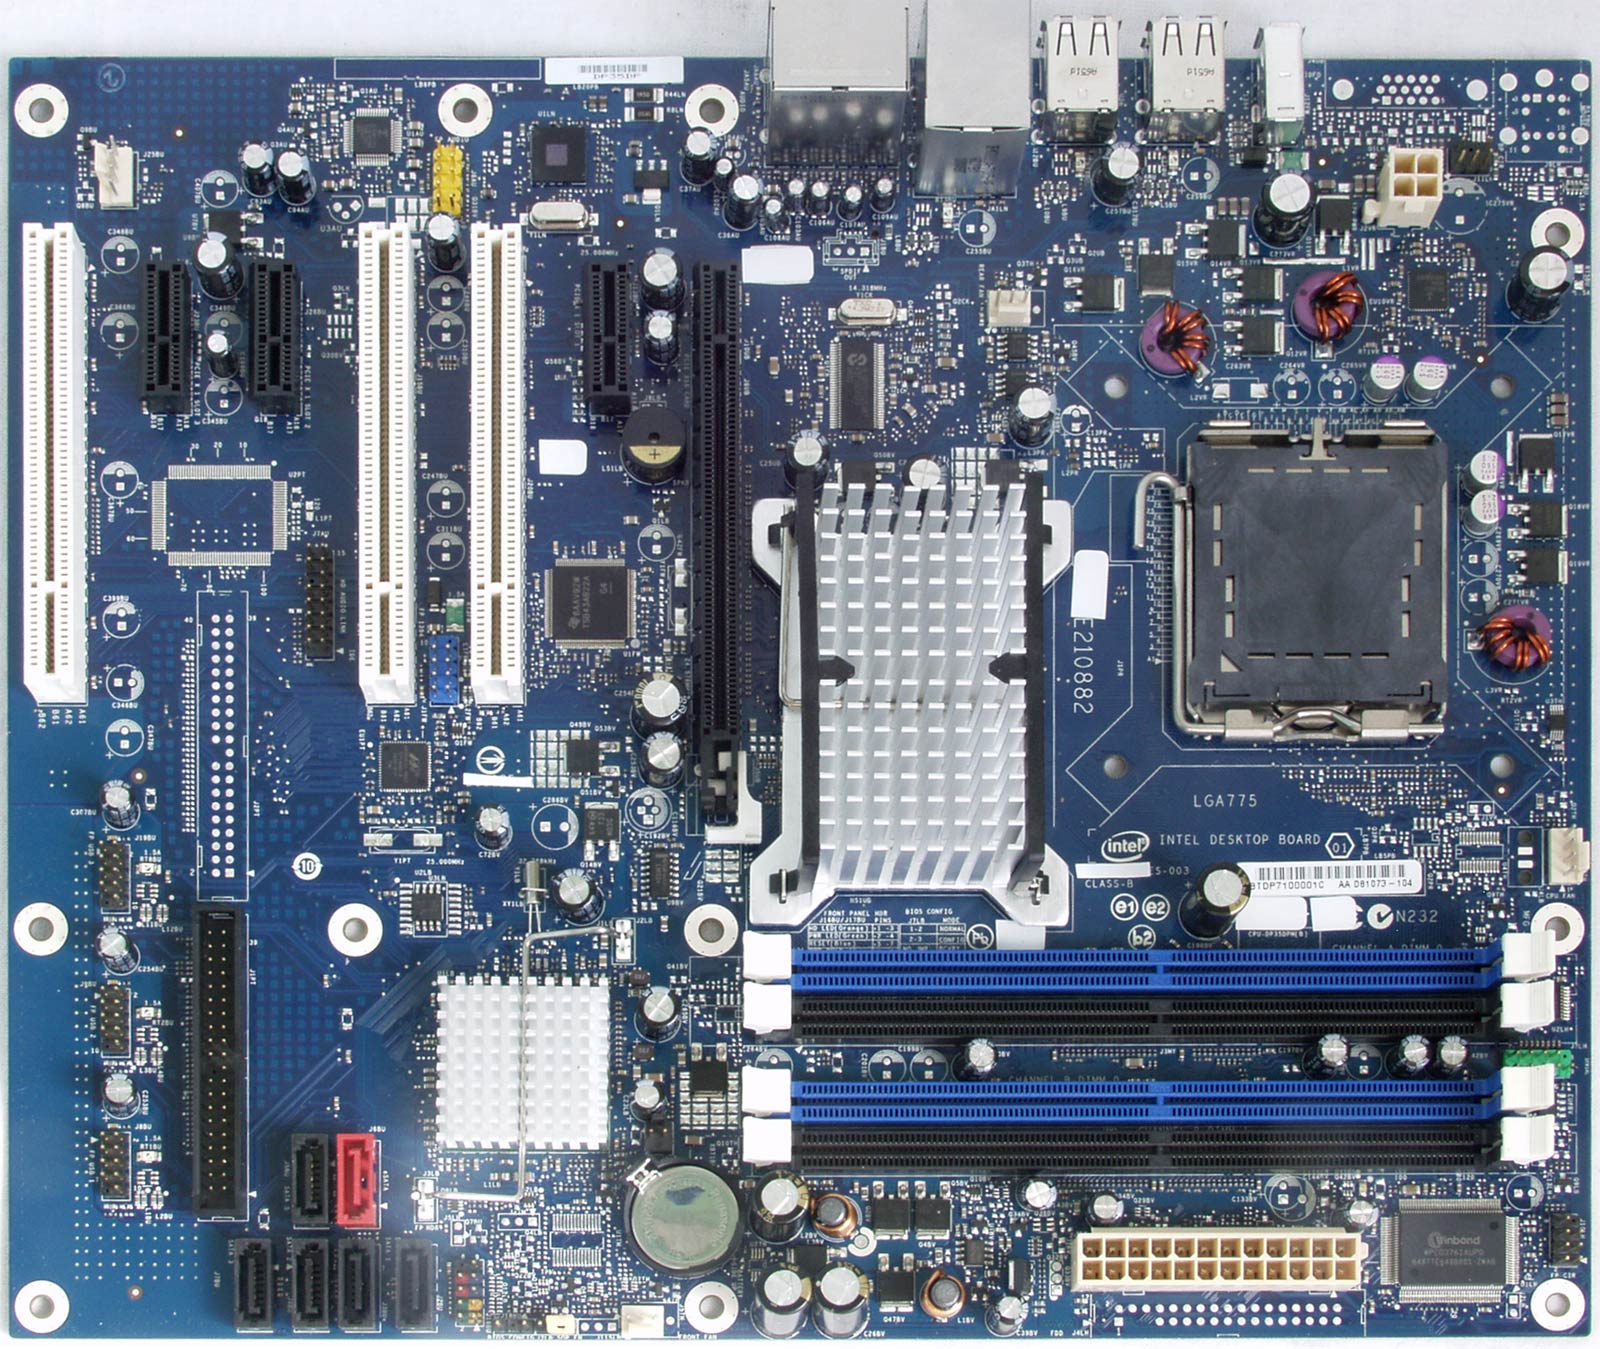 Intel desktop board drivers dh55tc